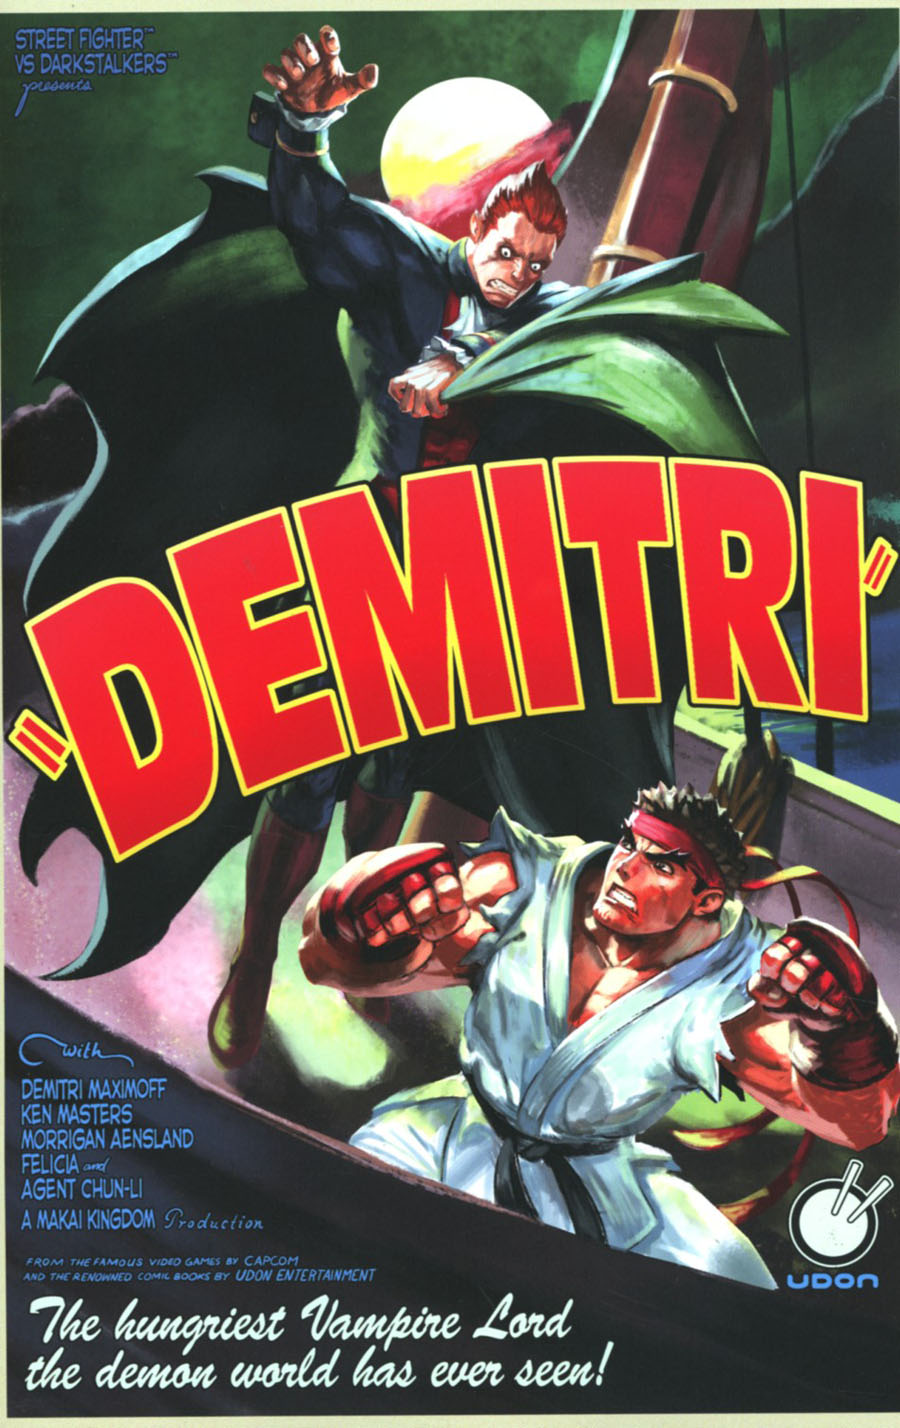 Street Fighter vs Darkstalkers #1 Cover D Incentive Joe Vriens Movie Poster Variant Cover